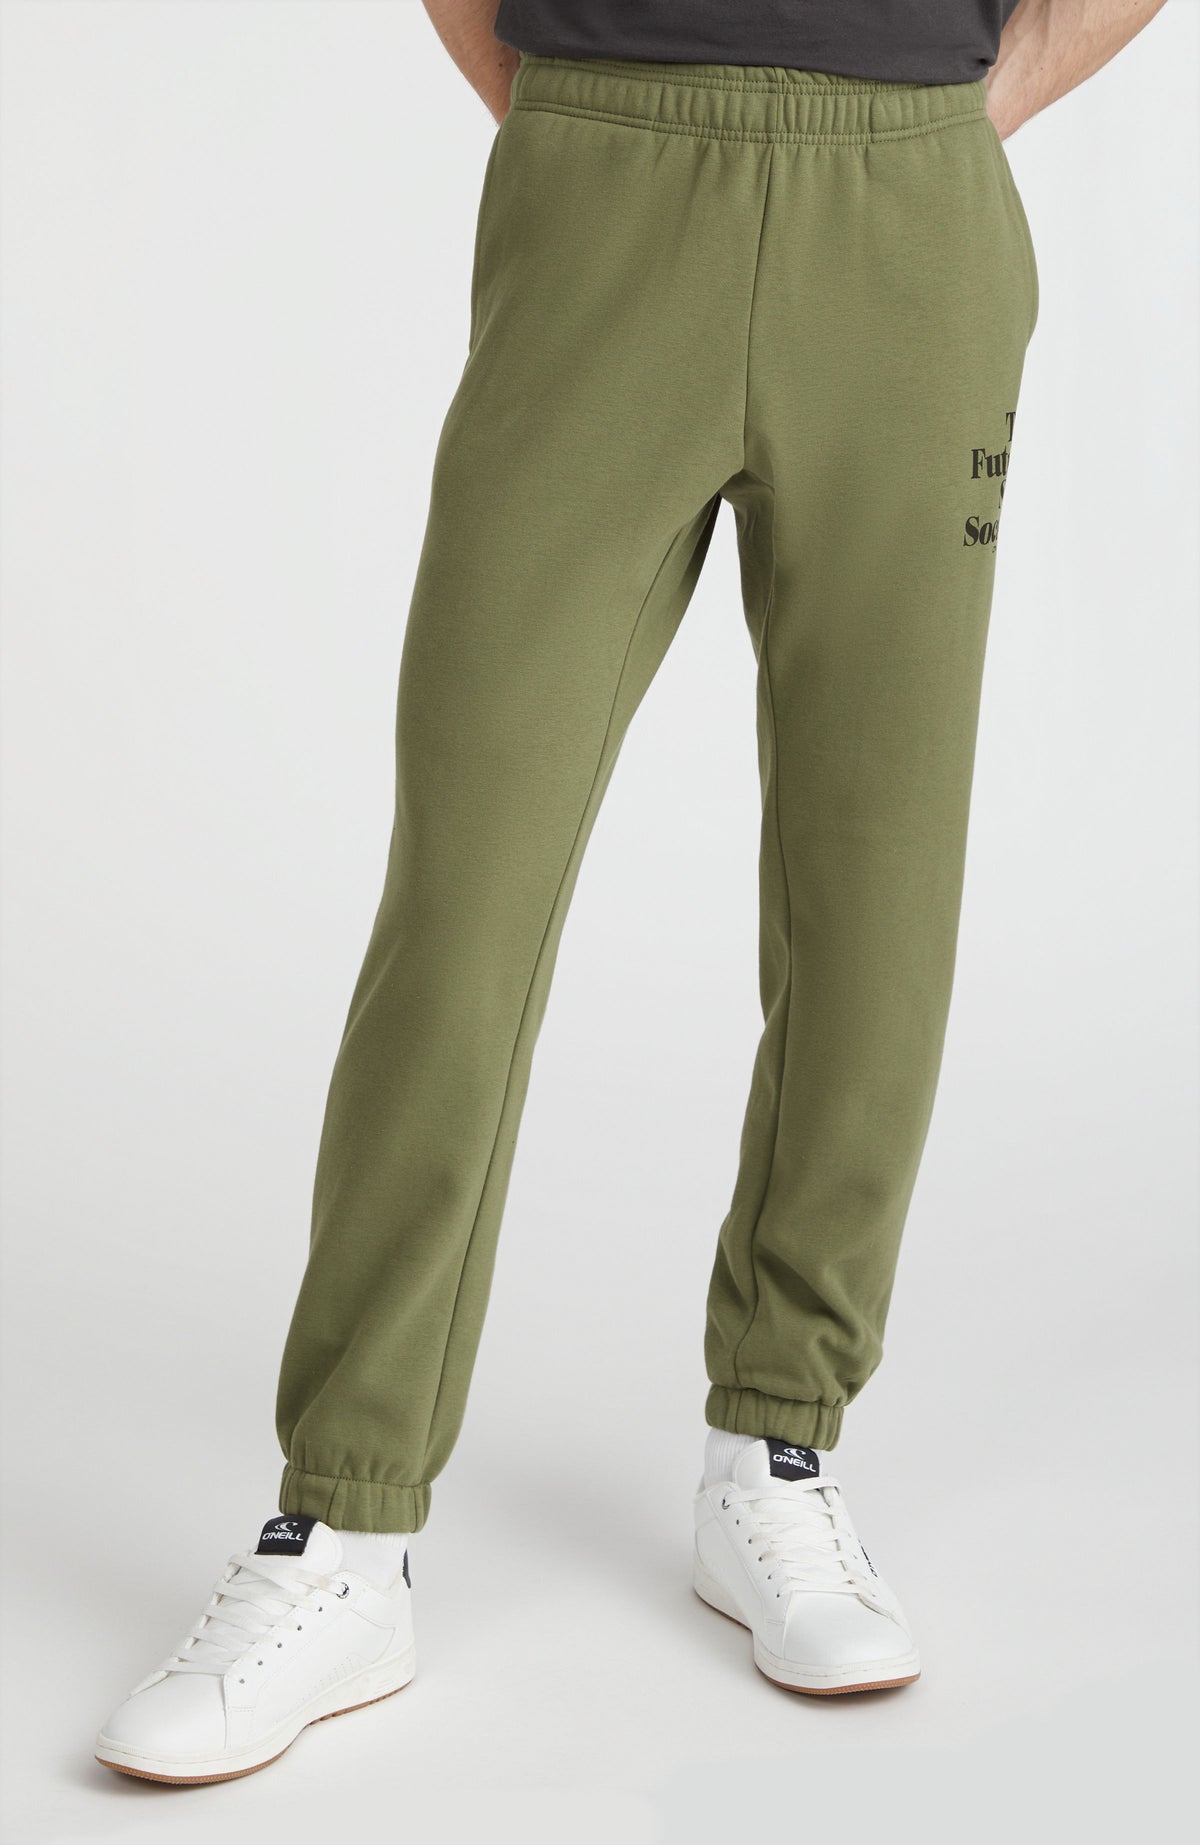 Cotton Green Joggers Olive Green Jogging Pants Green Sweatpants